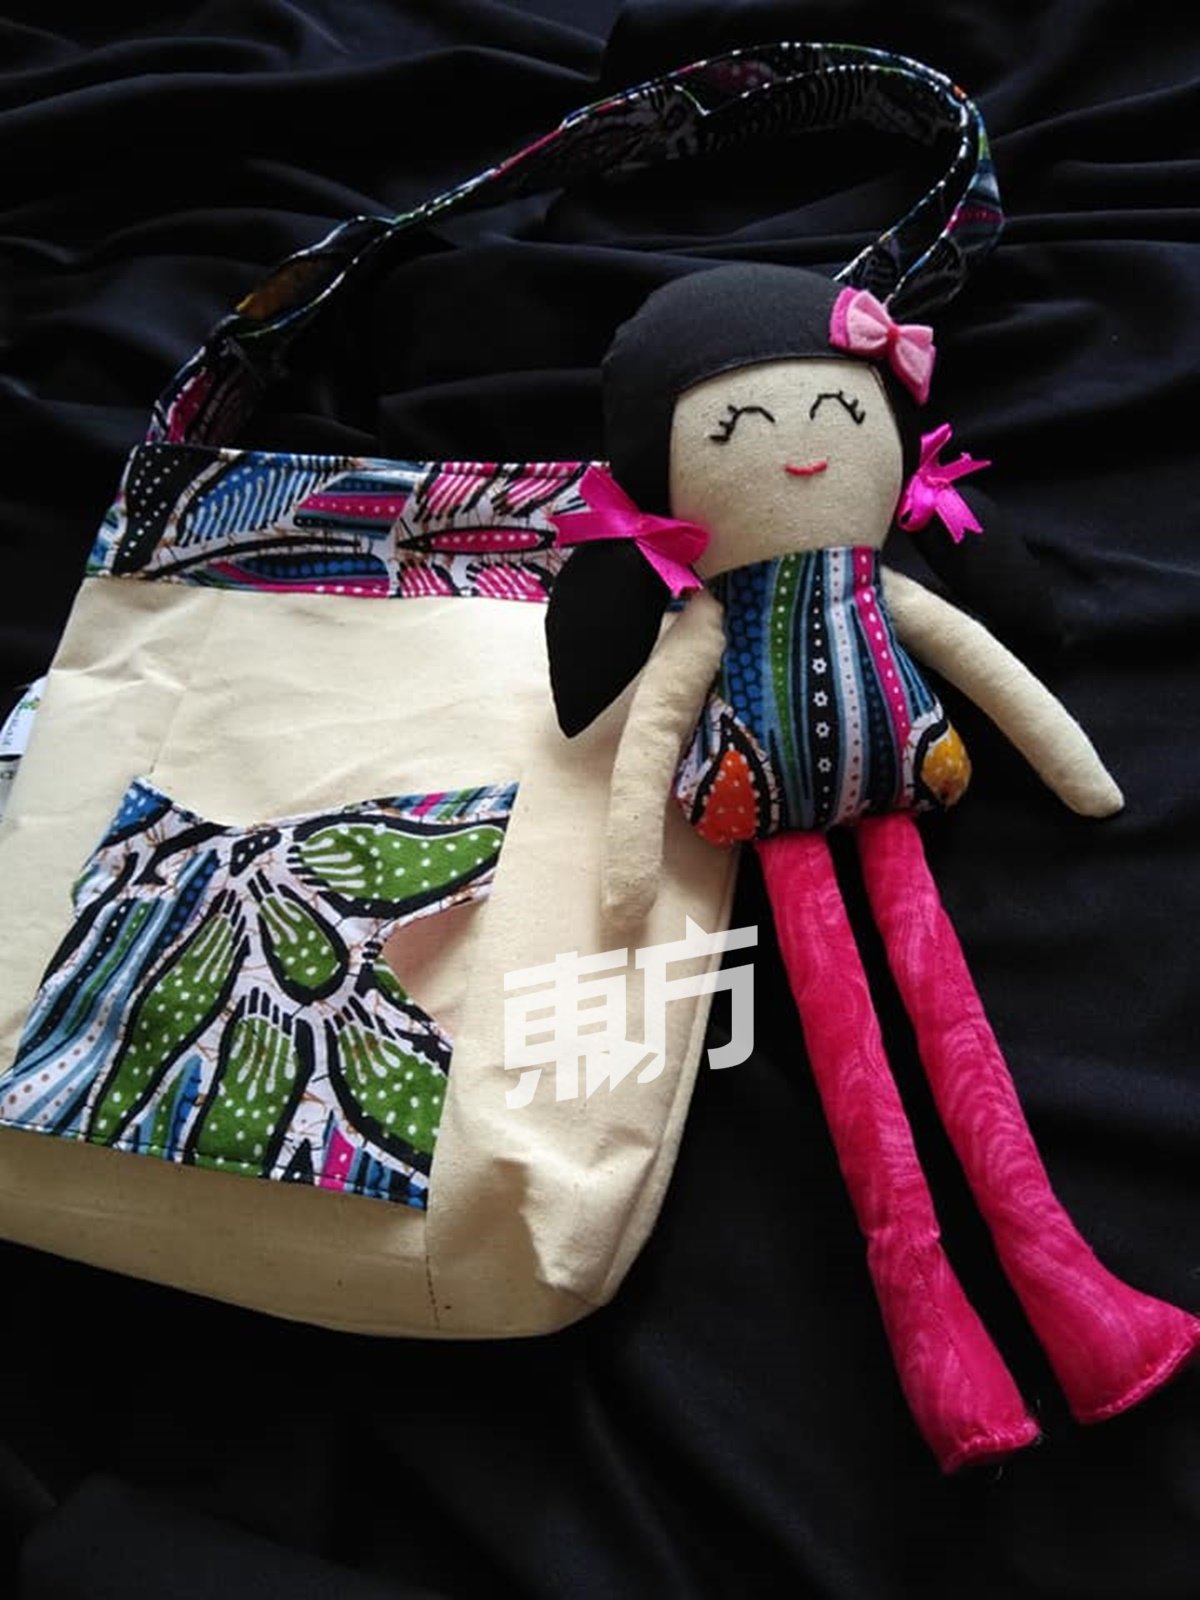 UmieAktif妈妈们的手缝作品不乏创意巧思。图中的手提袋外层饰有口袋，可以随意置放或取出布娃娃，为原本普通的袋子增添趣味。